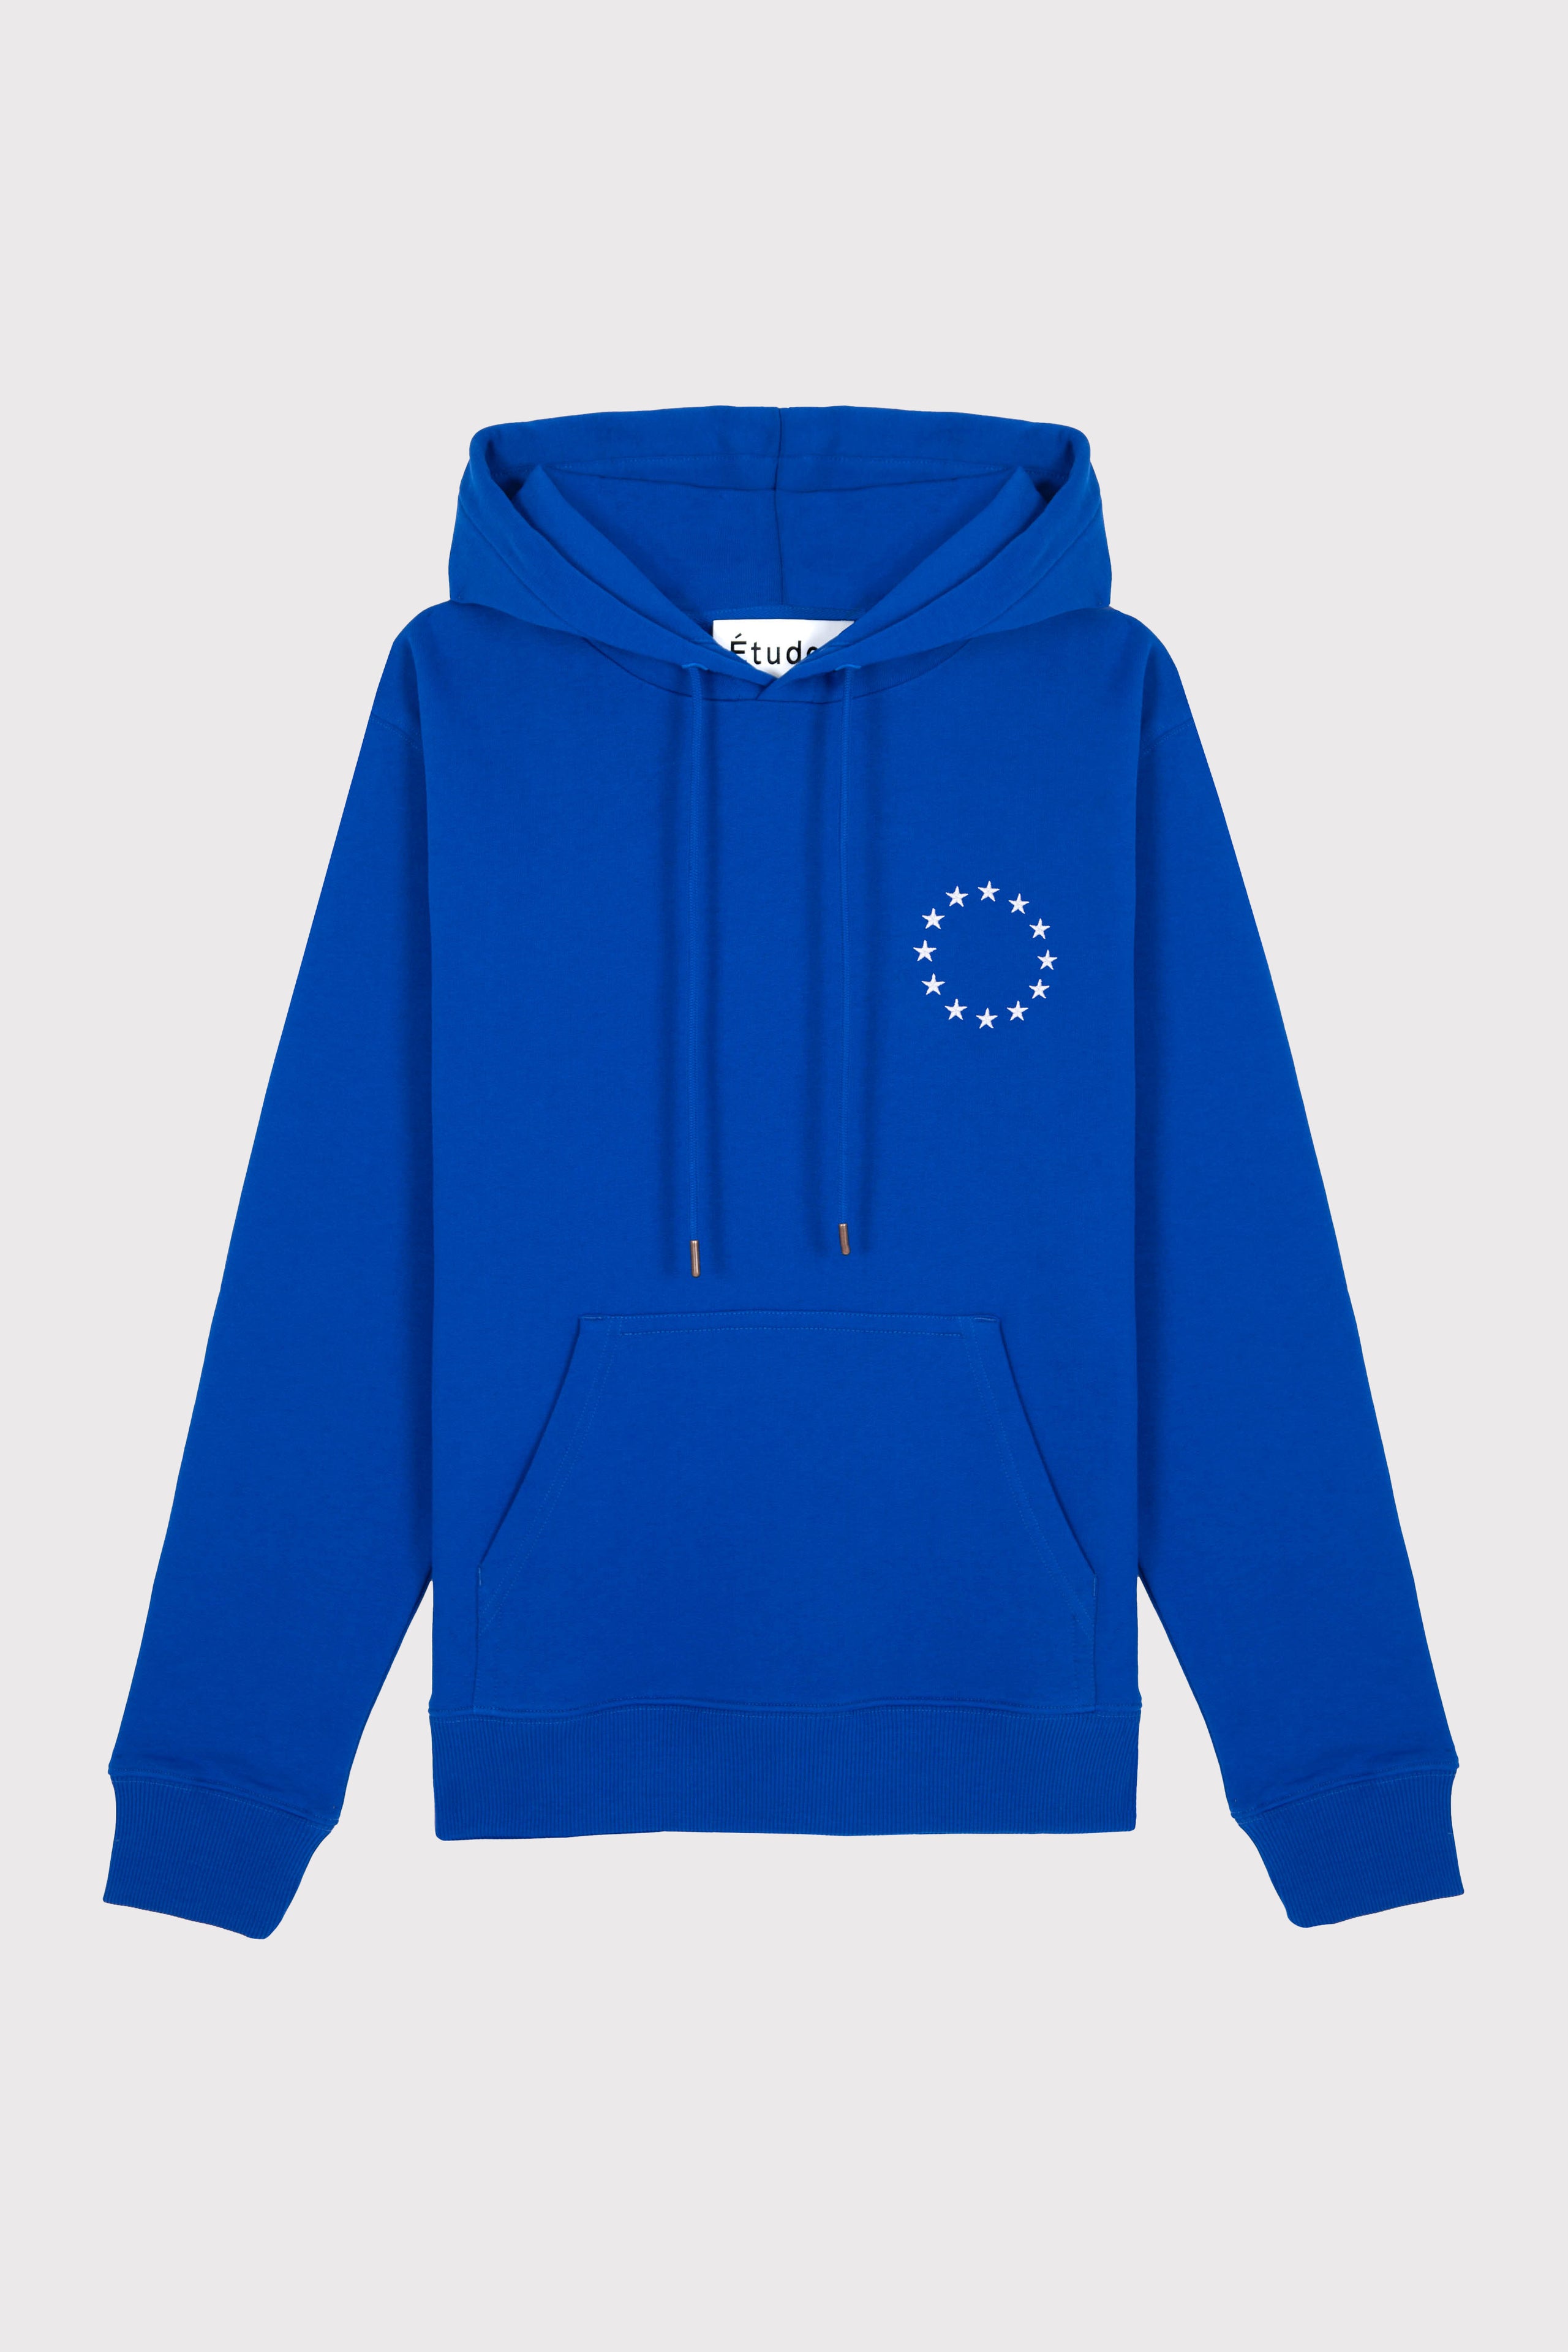 Études HOODIE EUROPA BLUE Sweatshirt 2